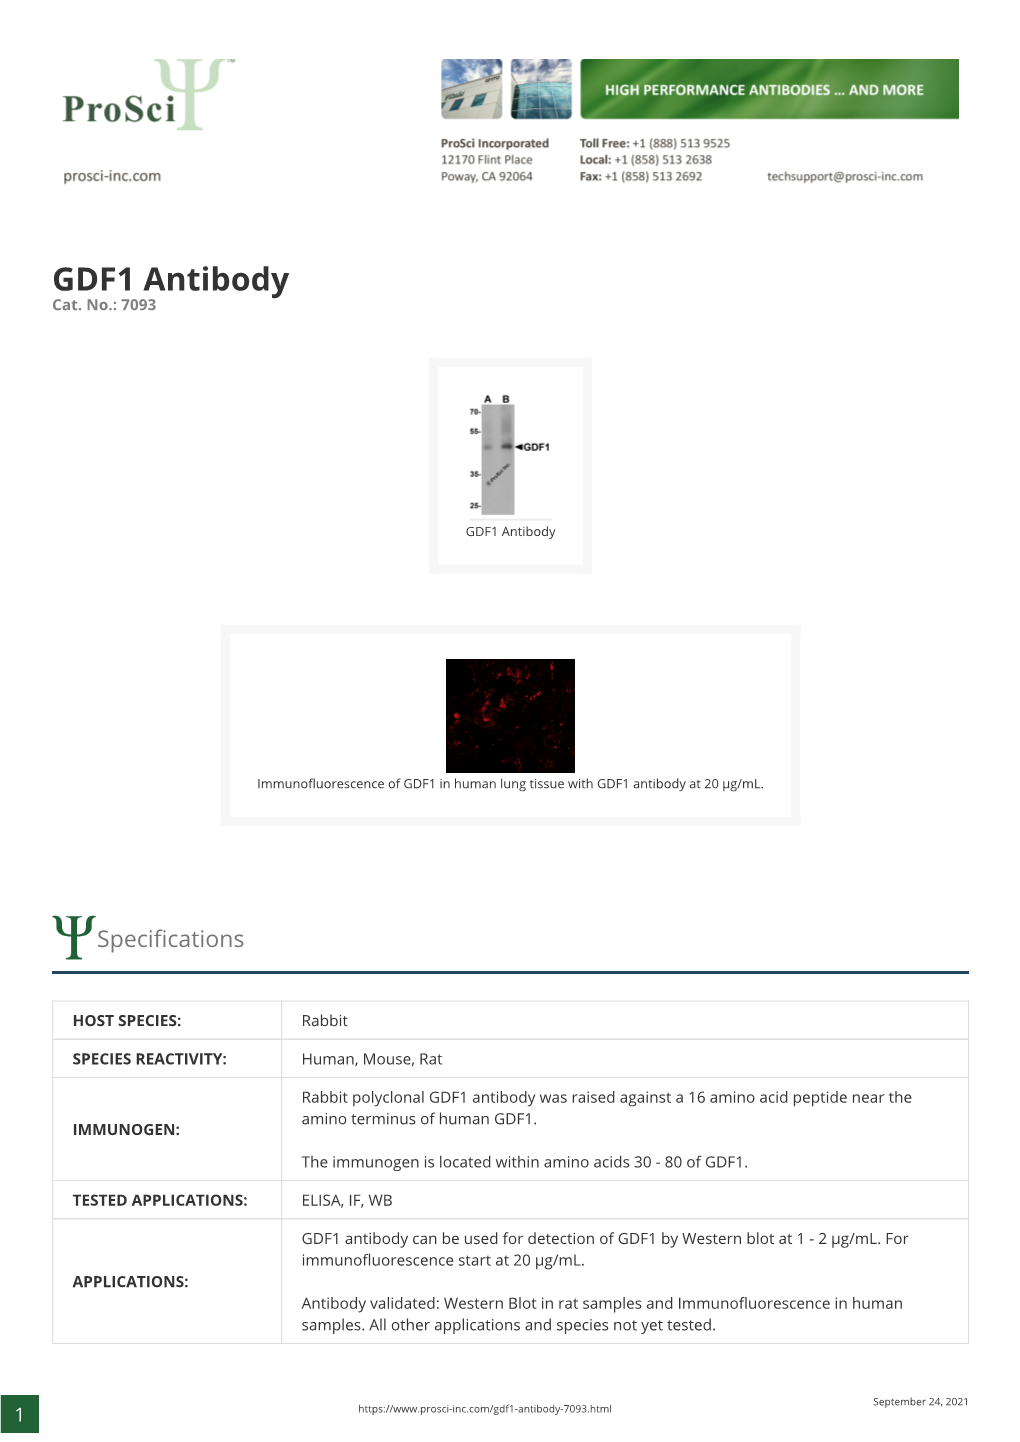 GDF1 Antibody Cat